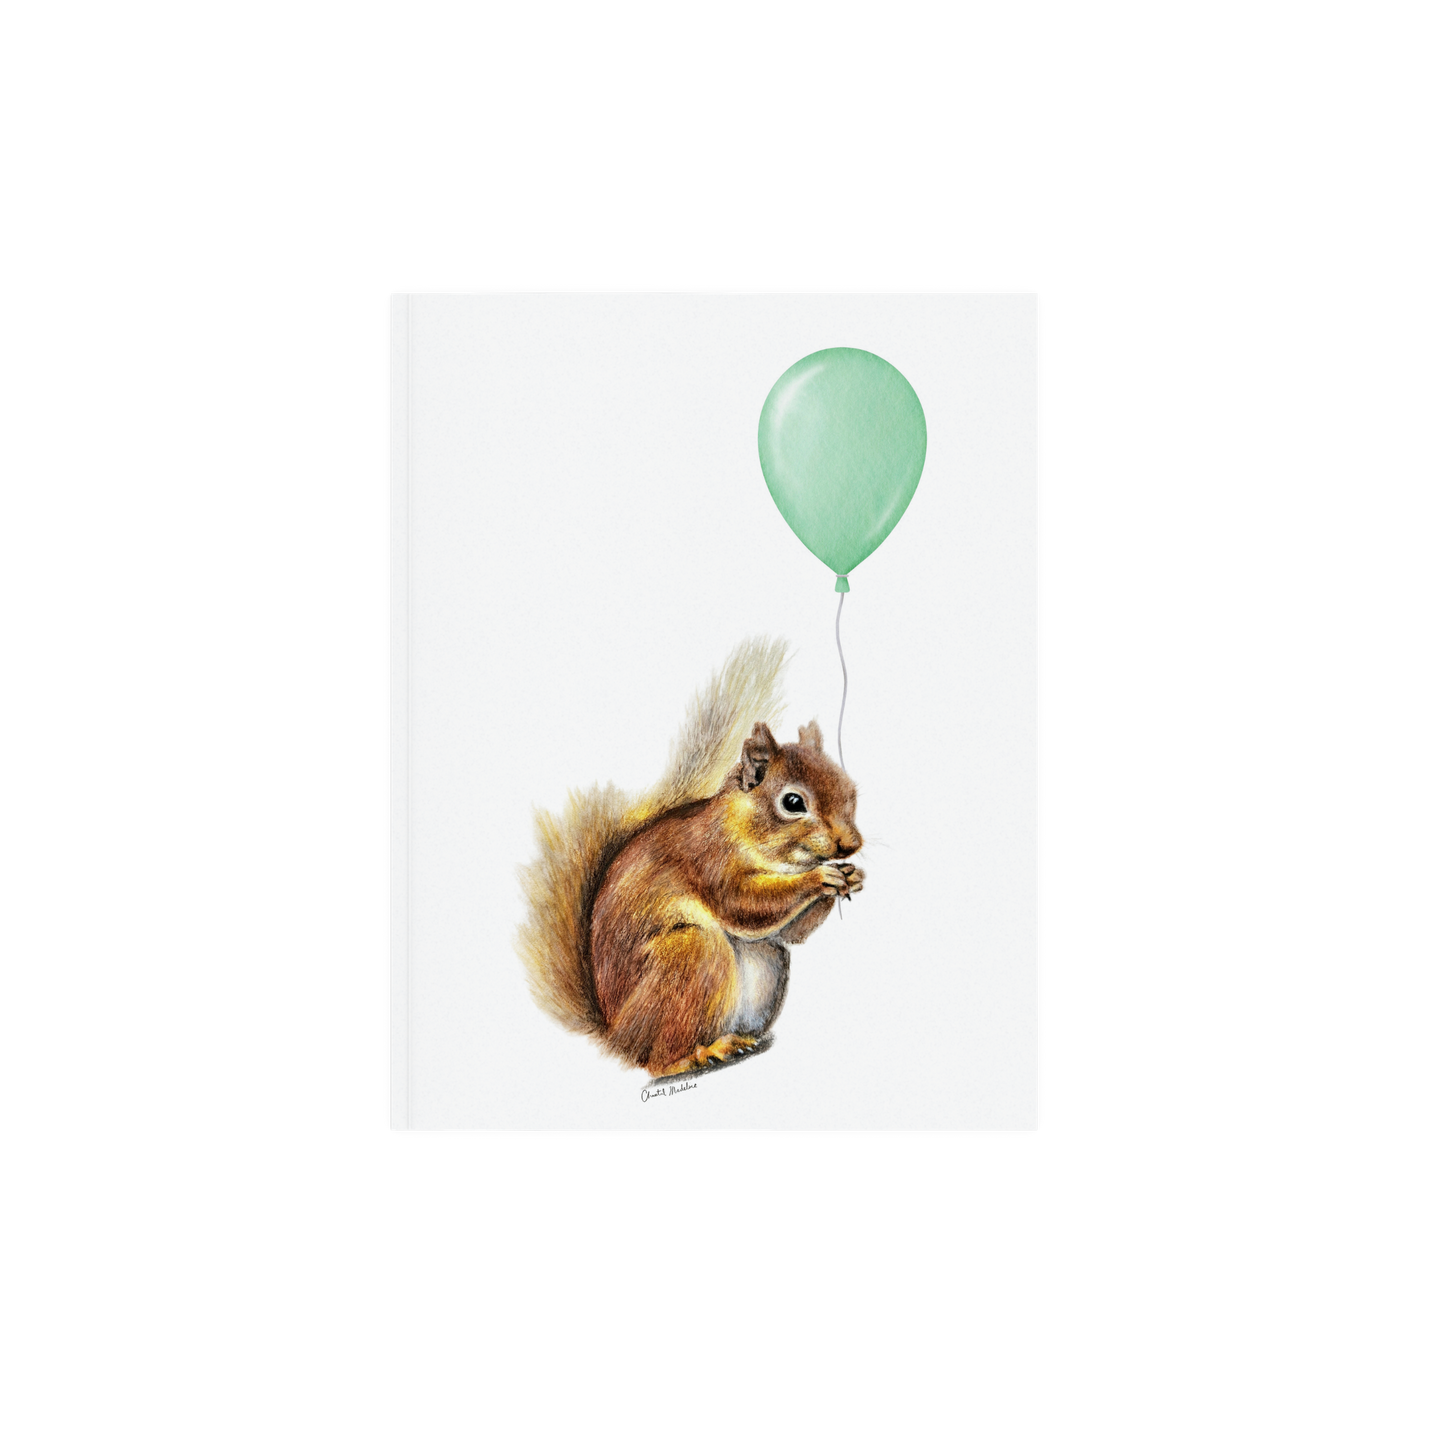 Squirrel With Green Balloon, Woodland nursery art, Giclee print on fine art paper